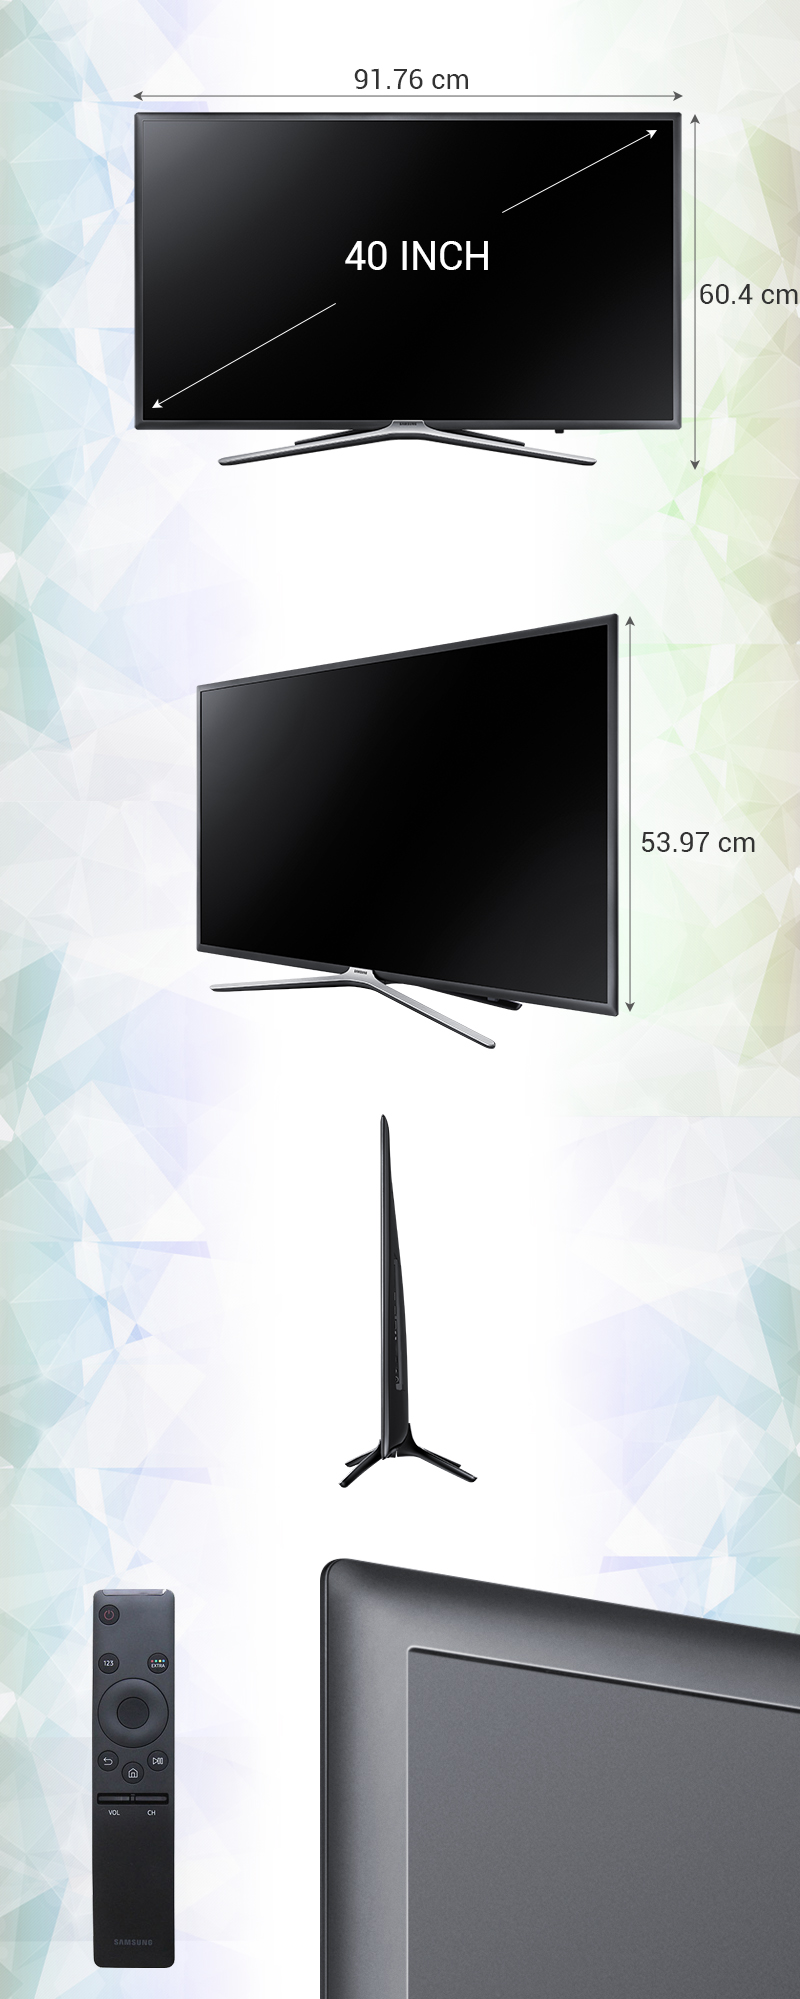 Smart Tivi Samsung 40 inch UA40K5500 - Kích thước TV